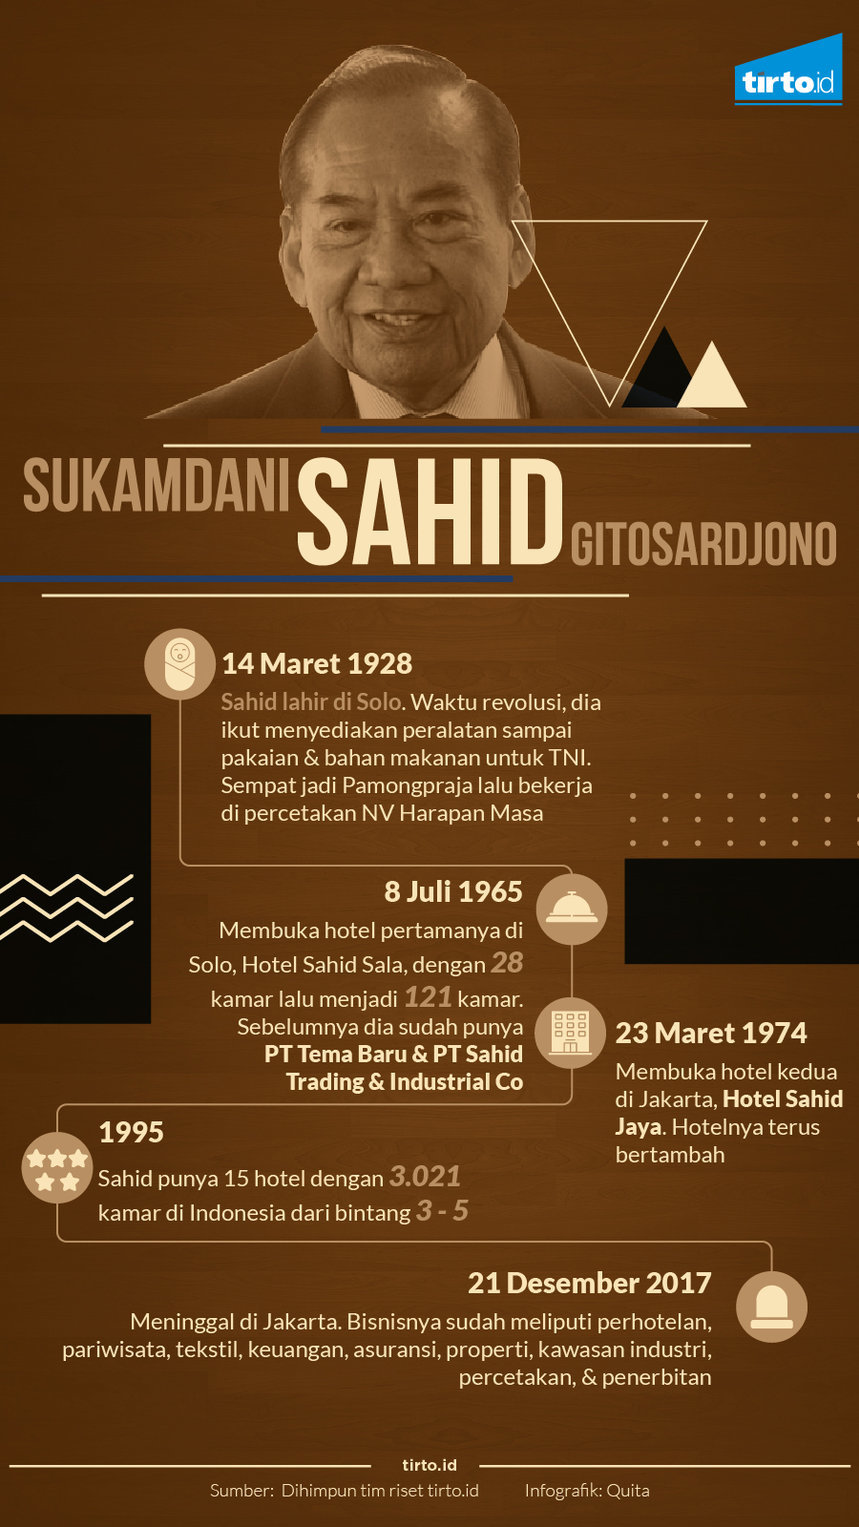 Infografik SUKAMDANI SAHID GITOSARDJONO